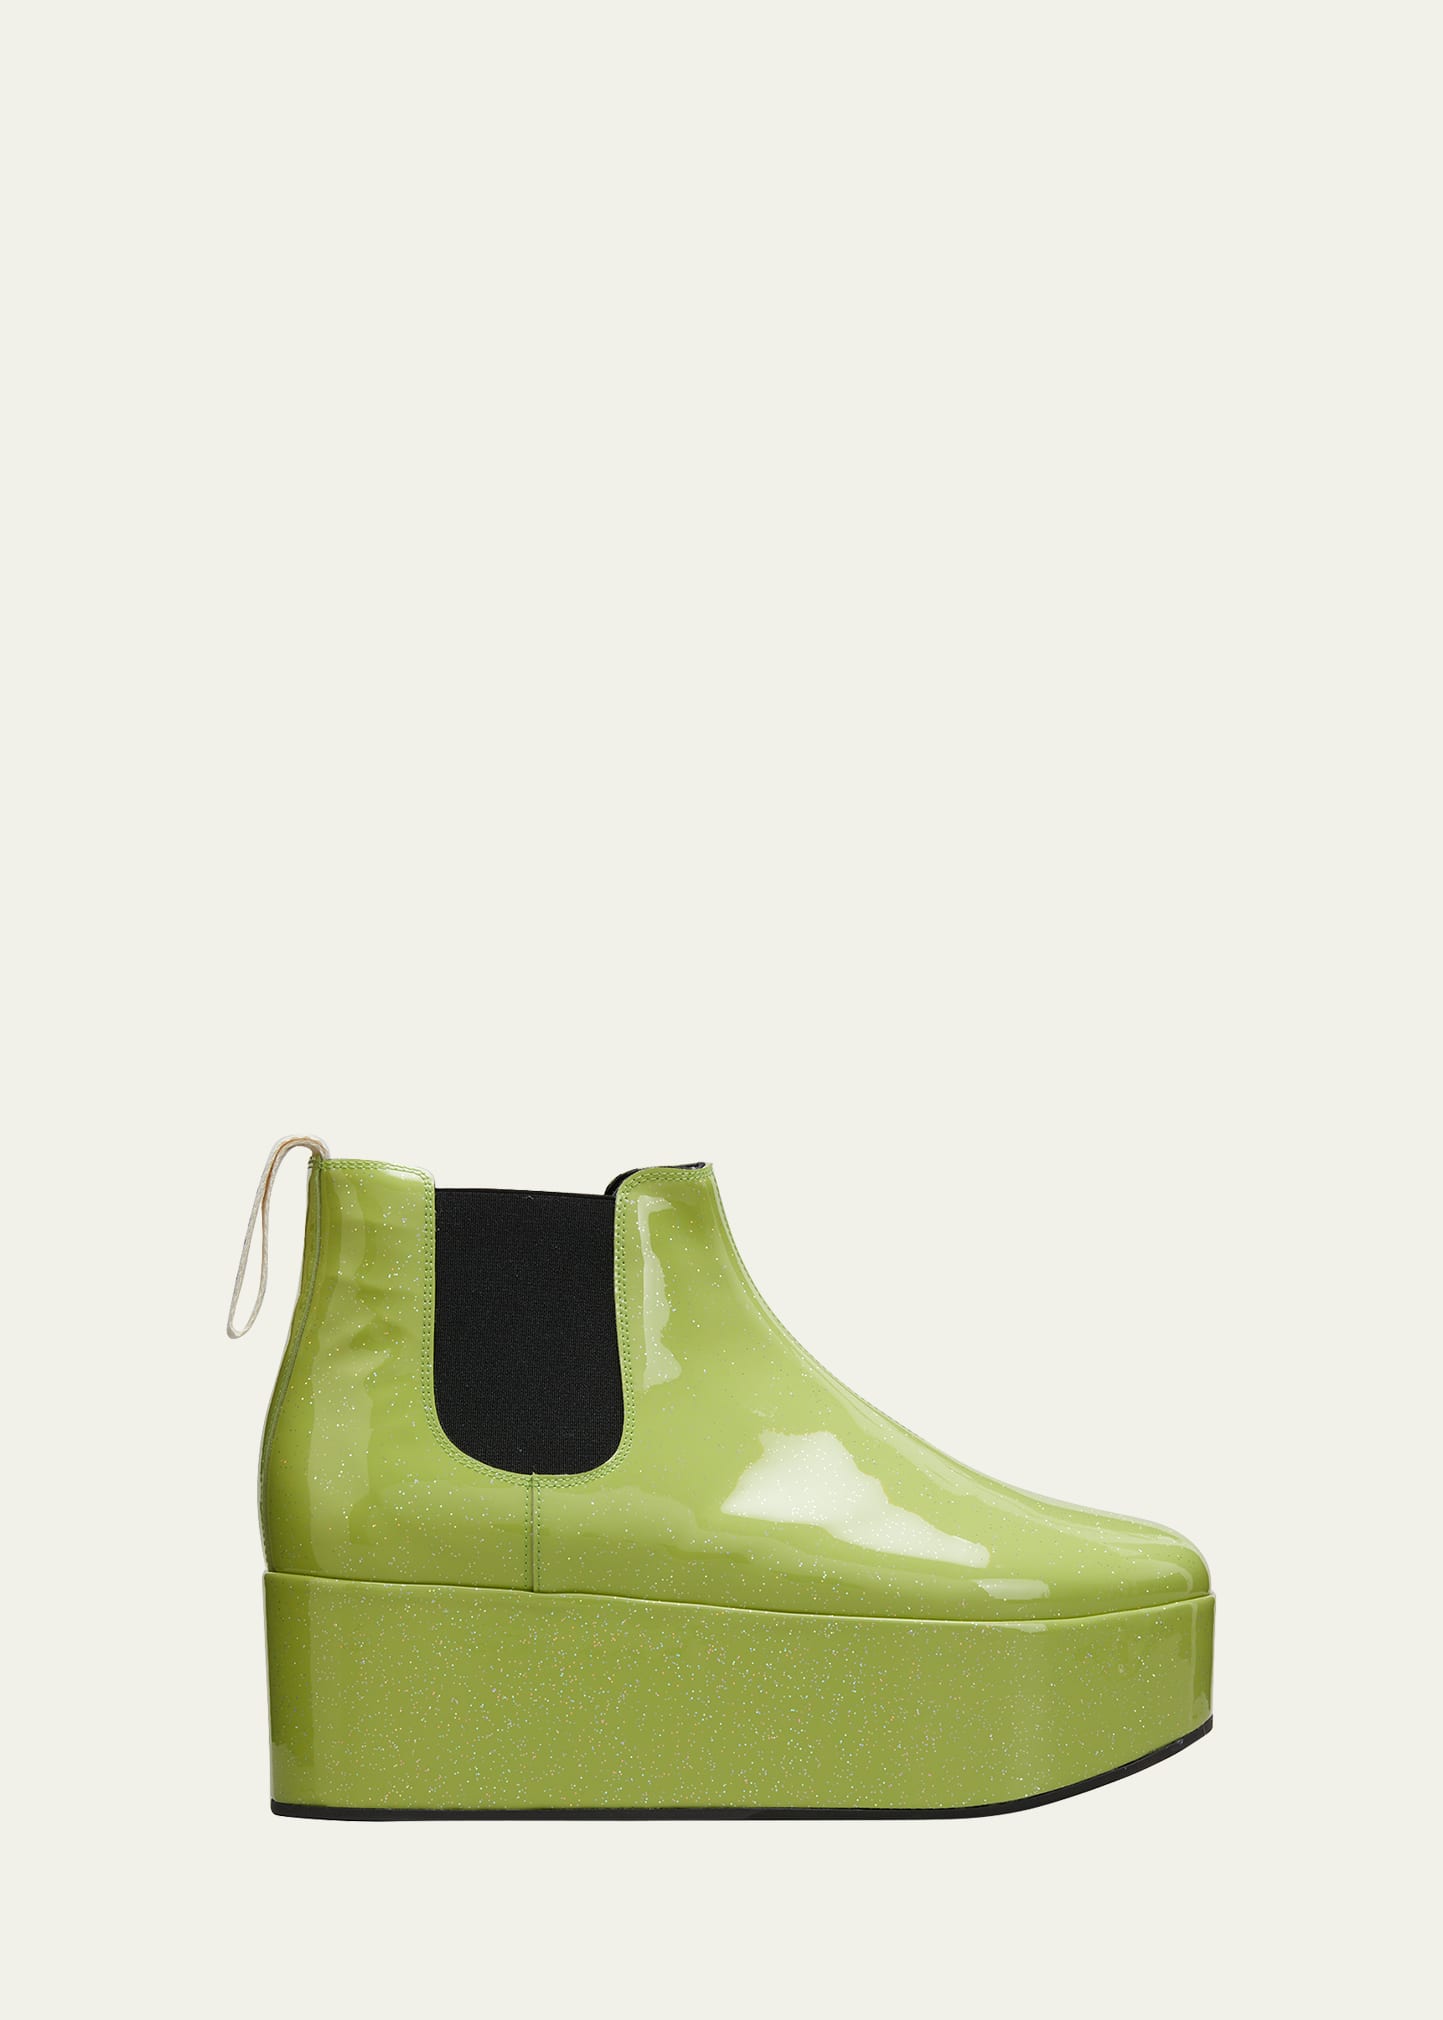 LOEWE Boots for Women | ModeSens